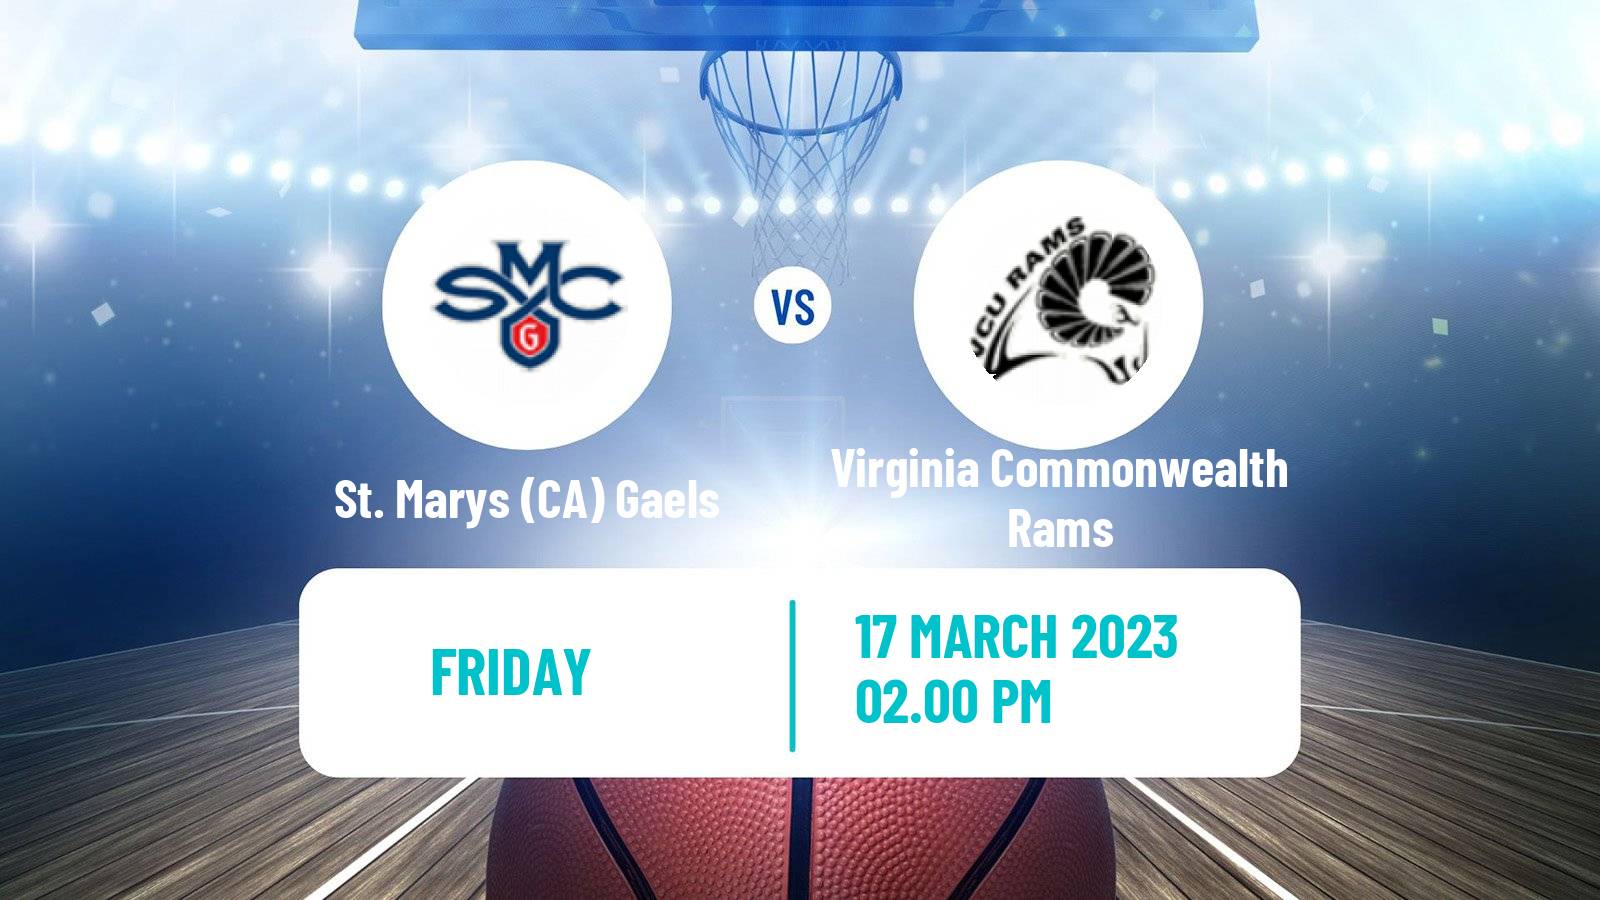 Basketball NCAA College Basketball St. Marys (CA) Gaels - Virginia Commonwealth Rams